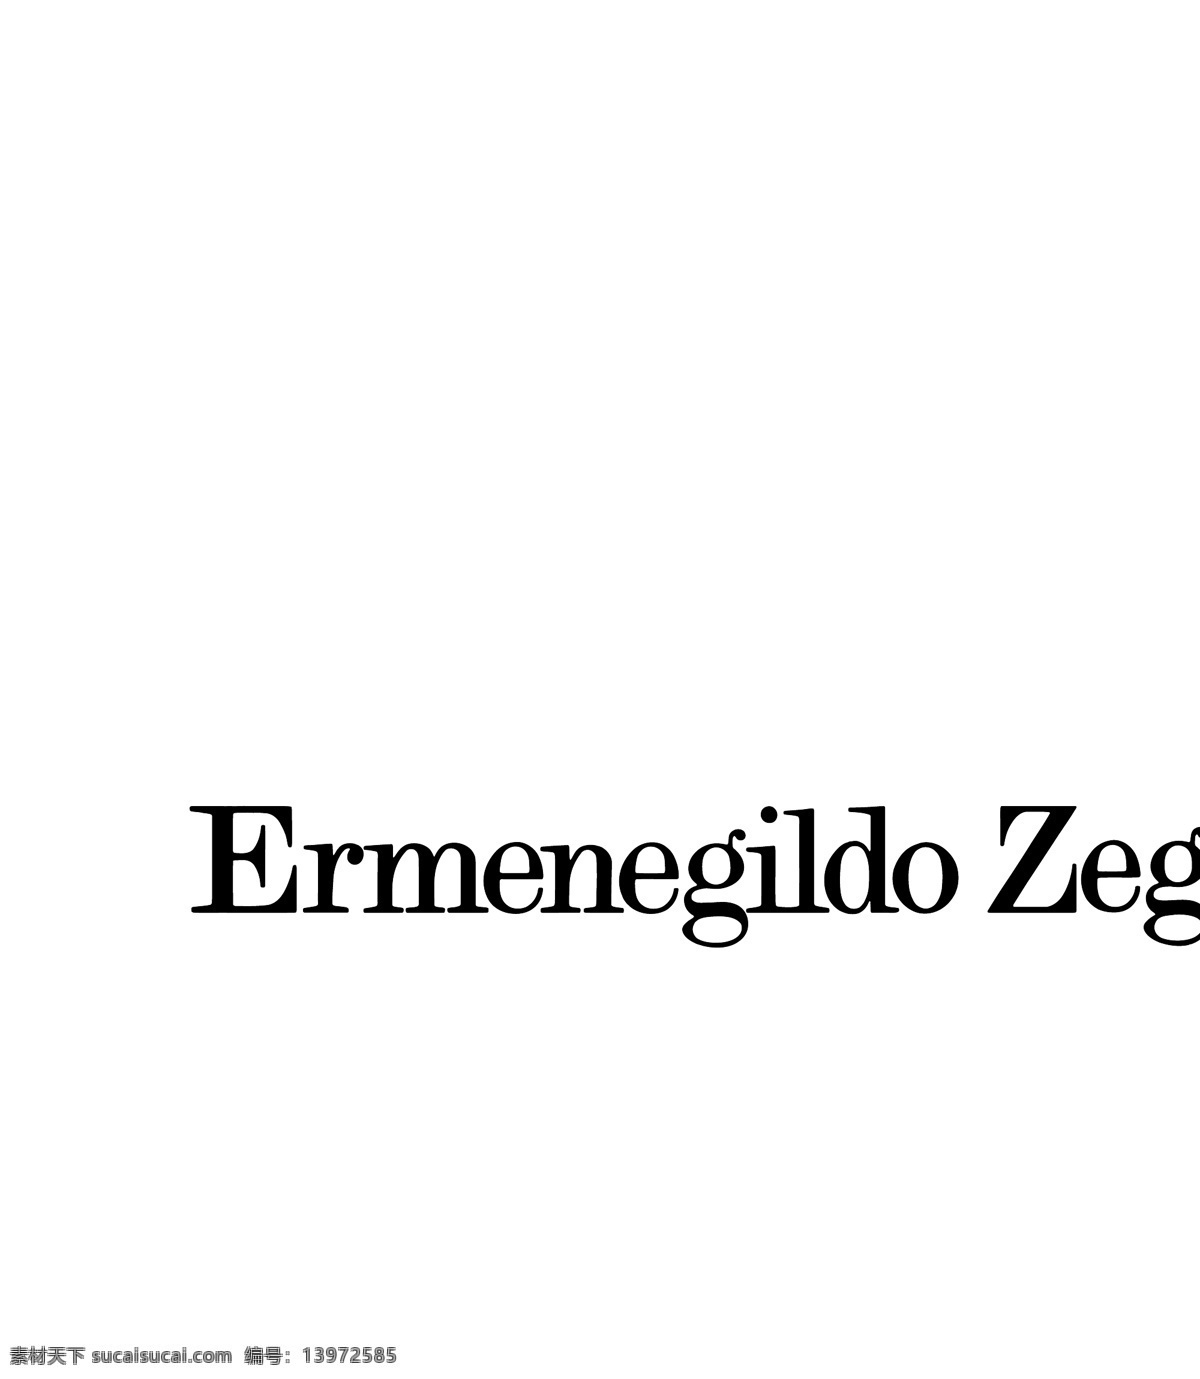 logo大全 logo 设计欣赏 商业矢量 矢量下载 ermenegildozegna 服饰 品牌 标志设计 欣赏 网页矢量 矢量图 其他矢量图